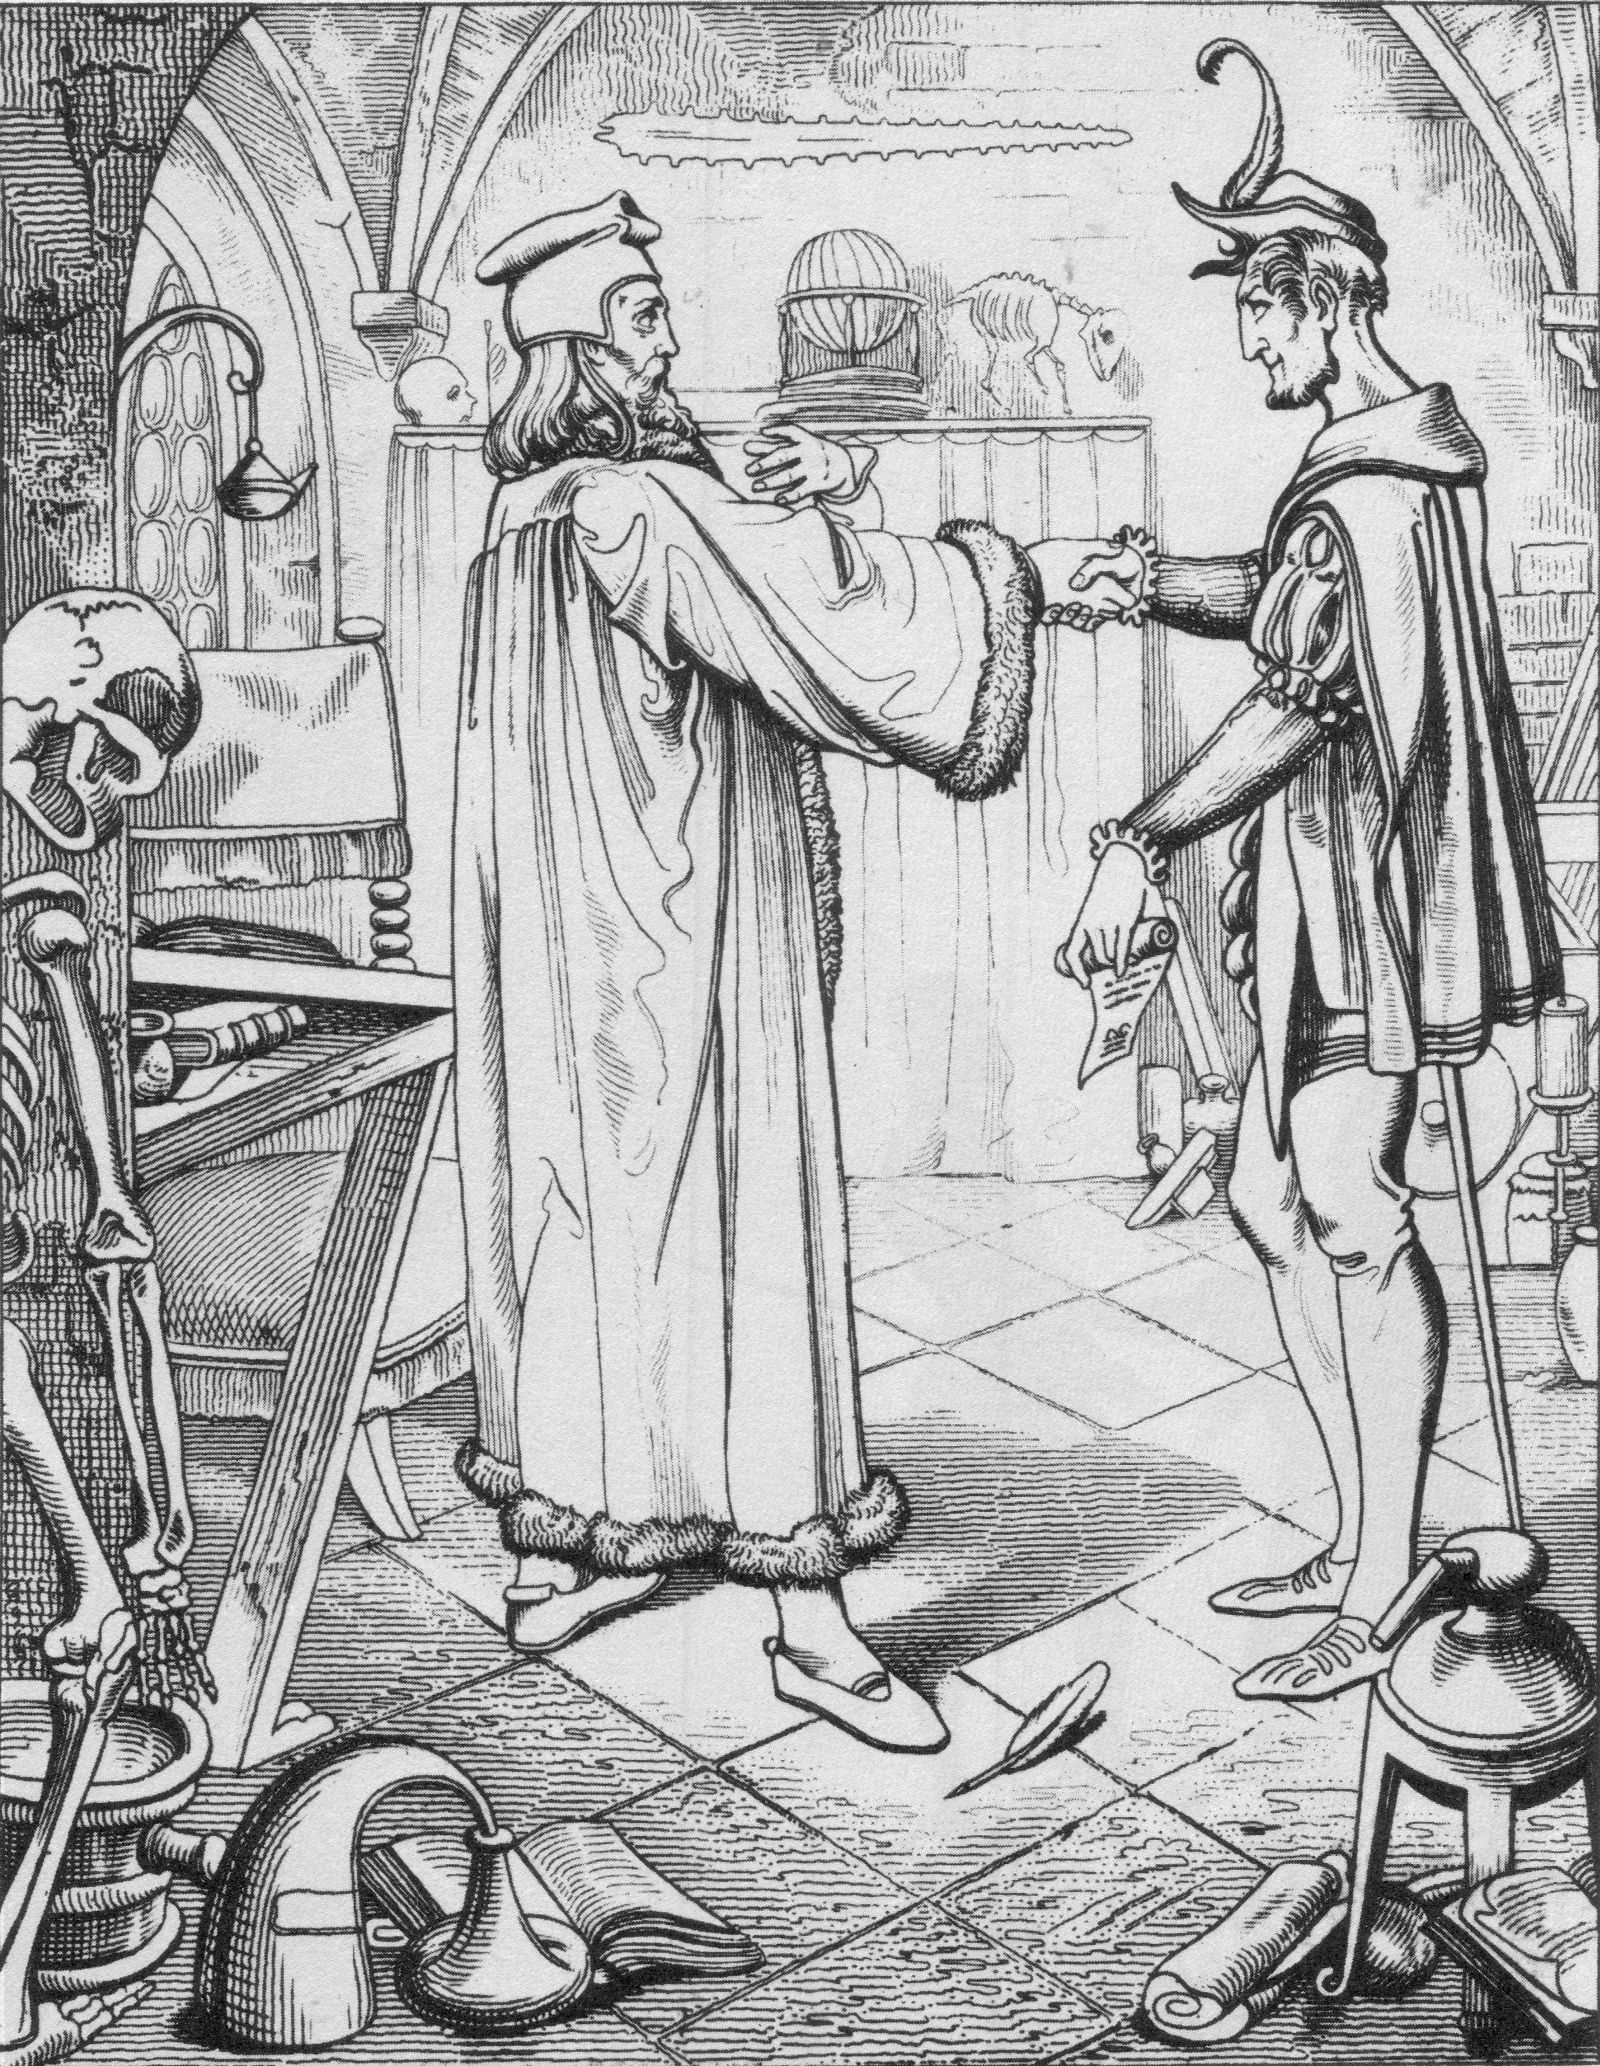  لوحة إبرام عقد مع الشيطان للرسام يوليوس نيسله من حوالي عام 1840. Der Teufelspakt, Stahlstich von Julius Nisle (um 1840) http://deacademic.com